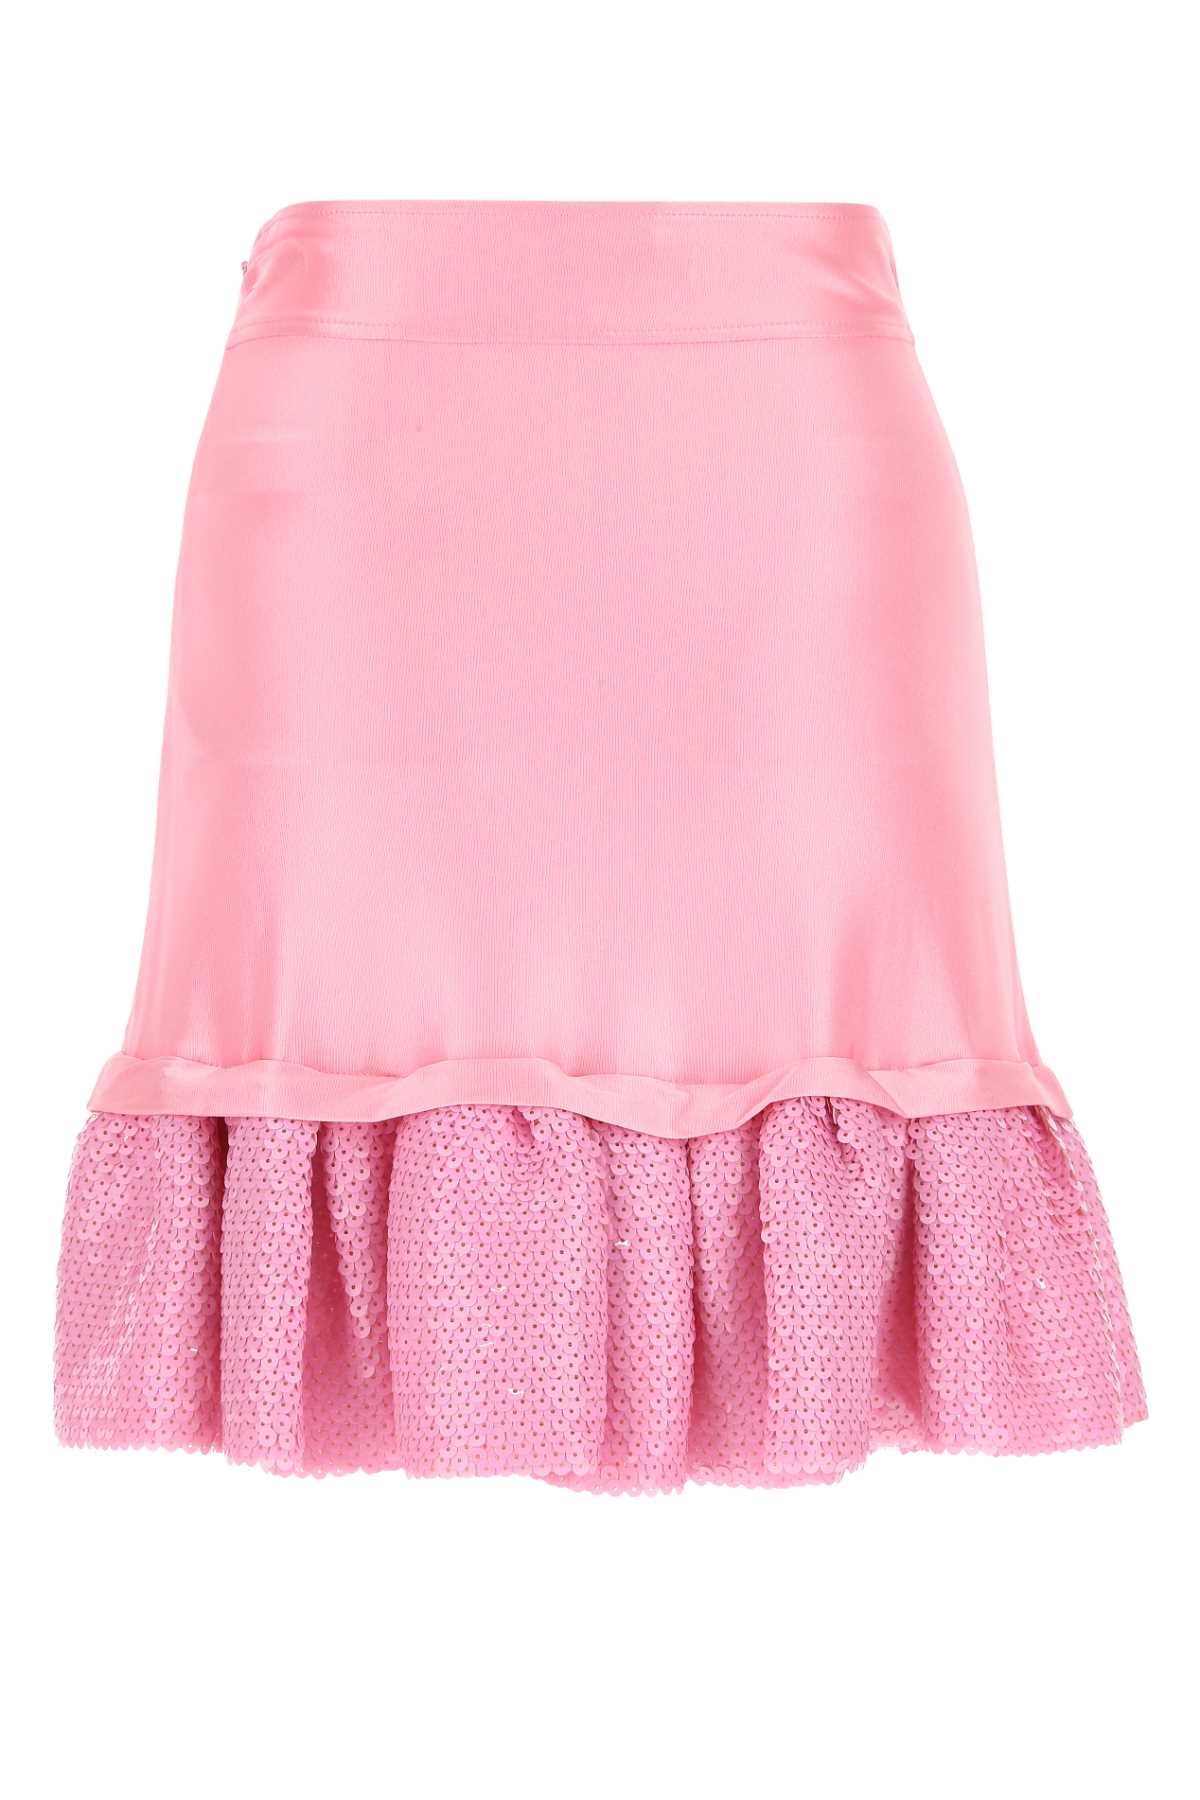 Paco Rabanne Pink Stretch Viscose Mini Skirt In P652